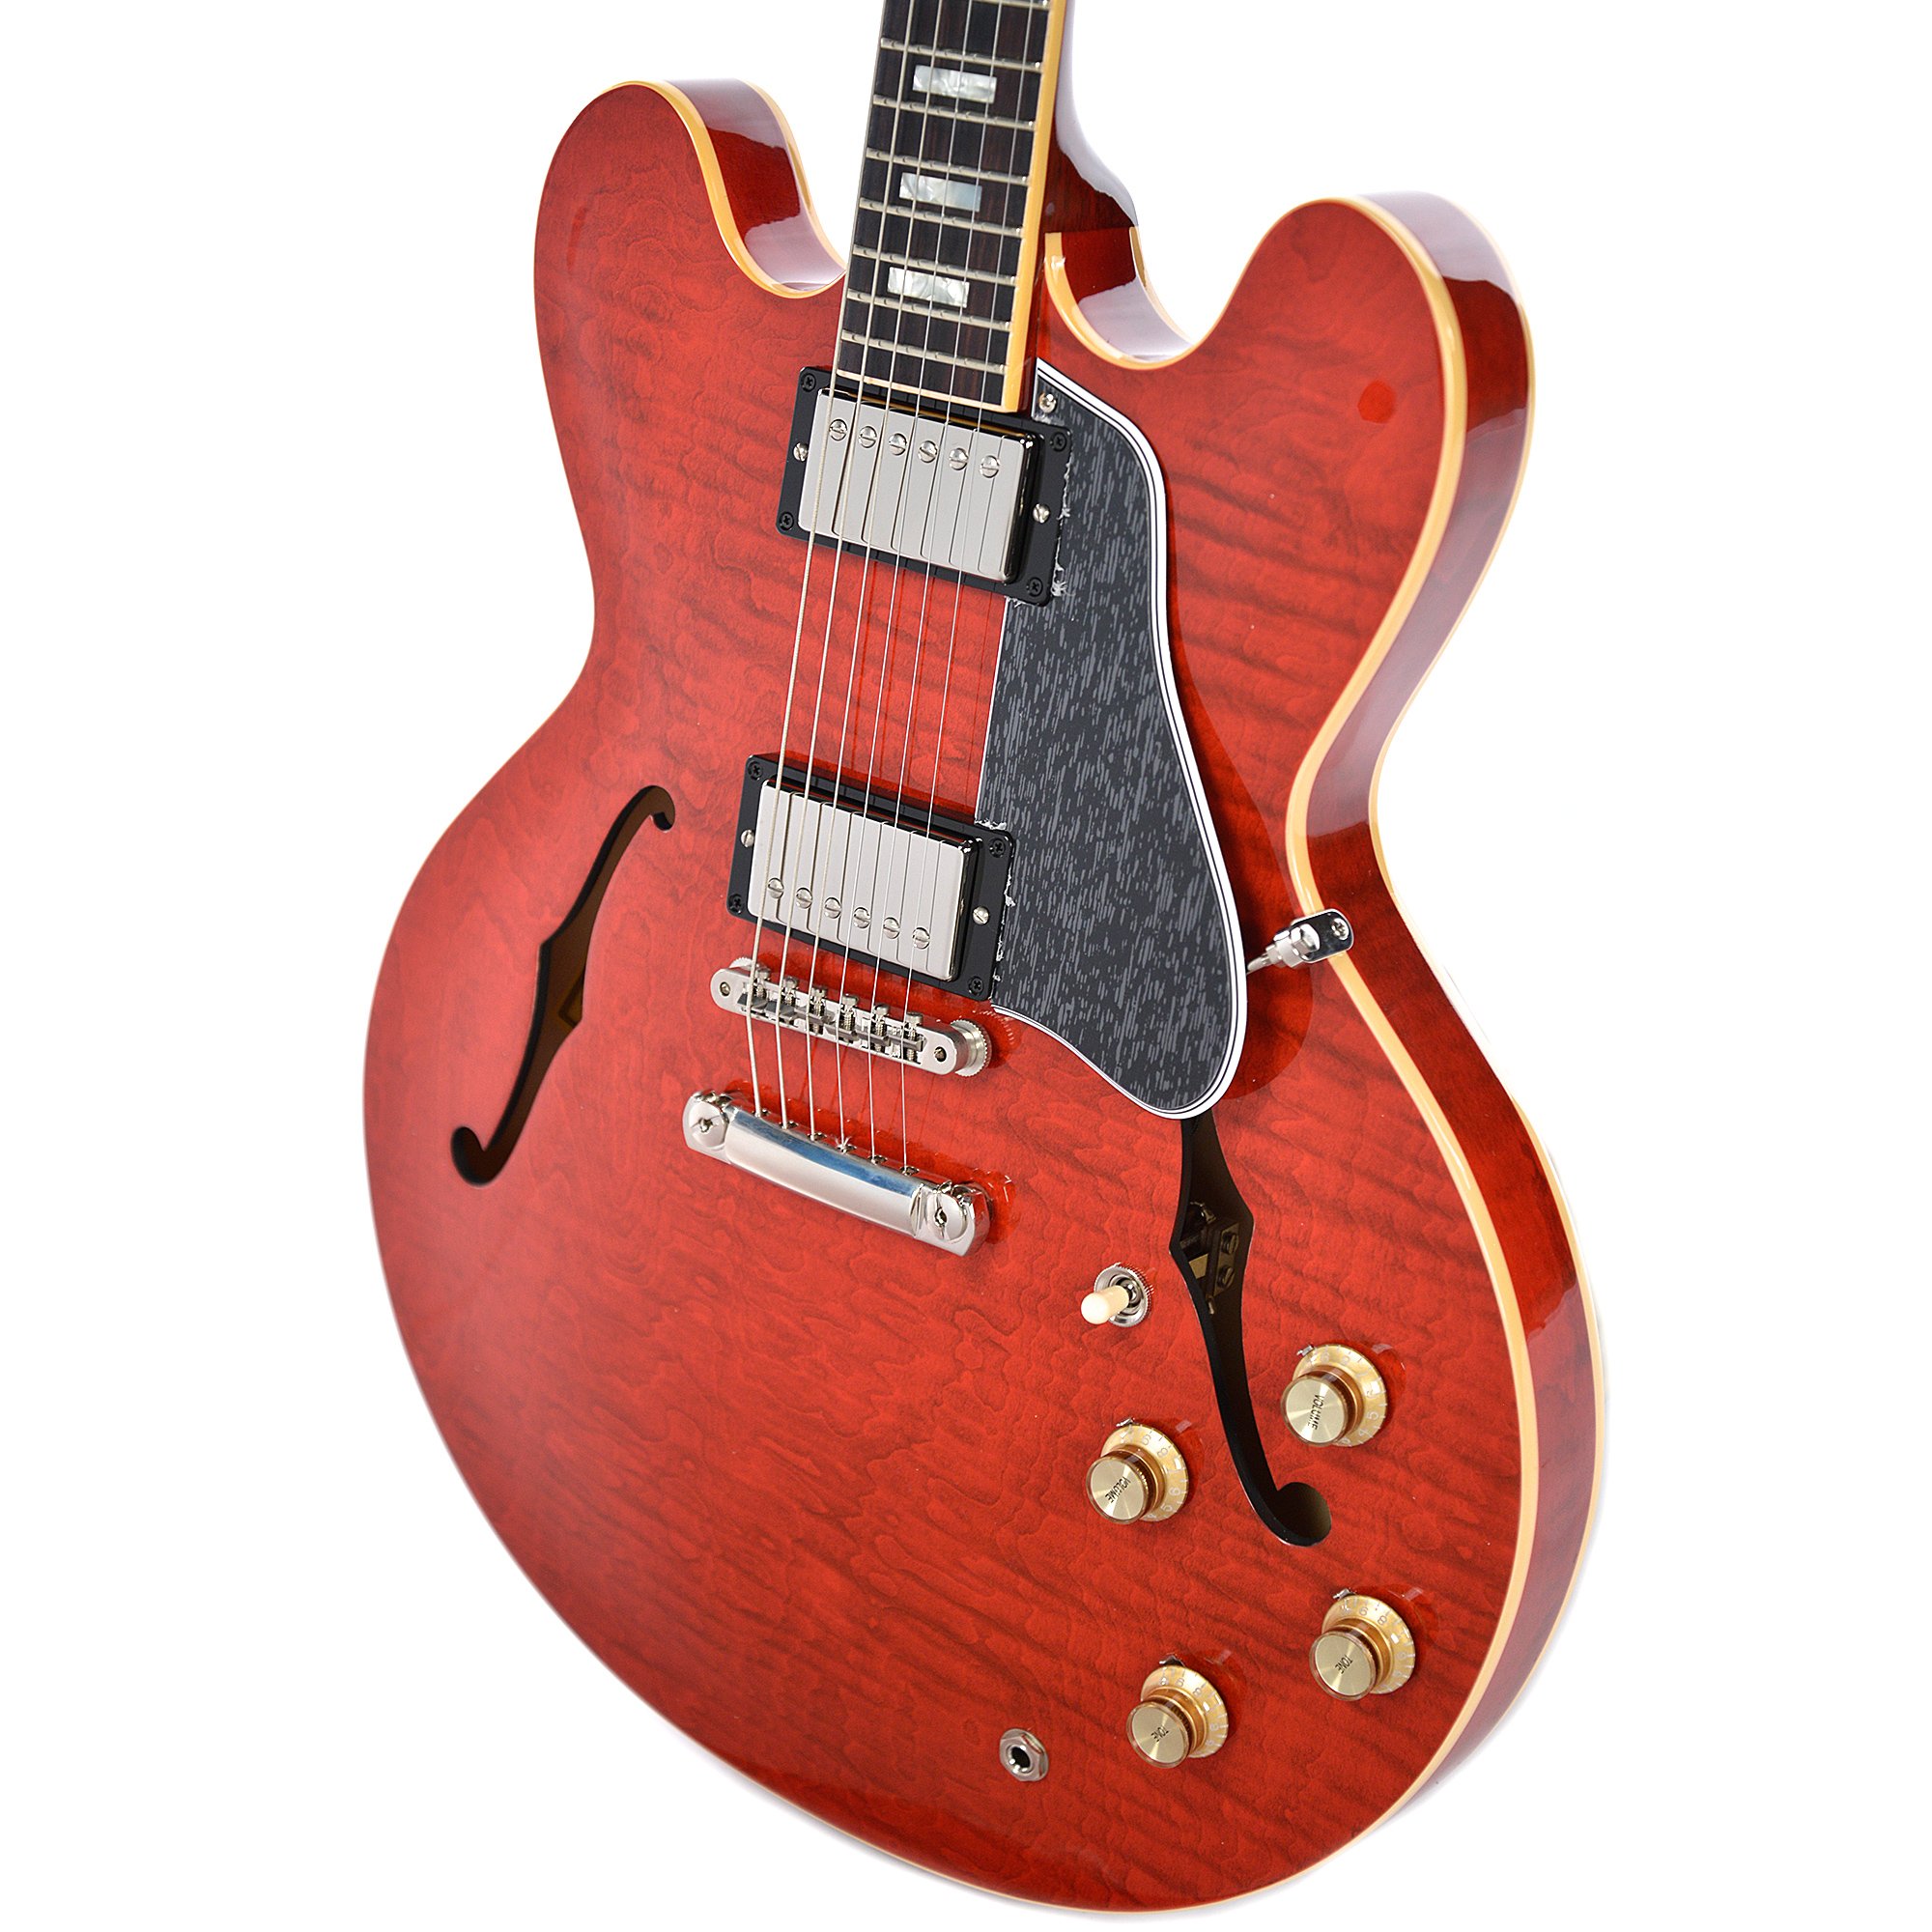 Gibson Es-335 Figured 2018 Ltd - Antique Sixties Cherry - Semi-hollow electric guitar - Variation 2